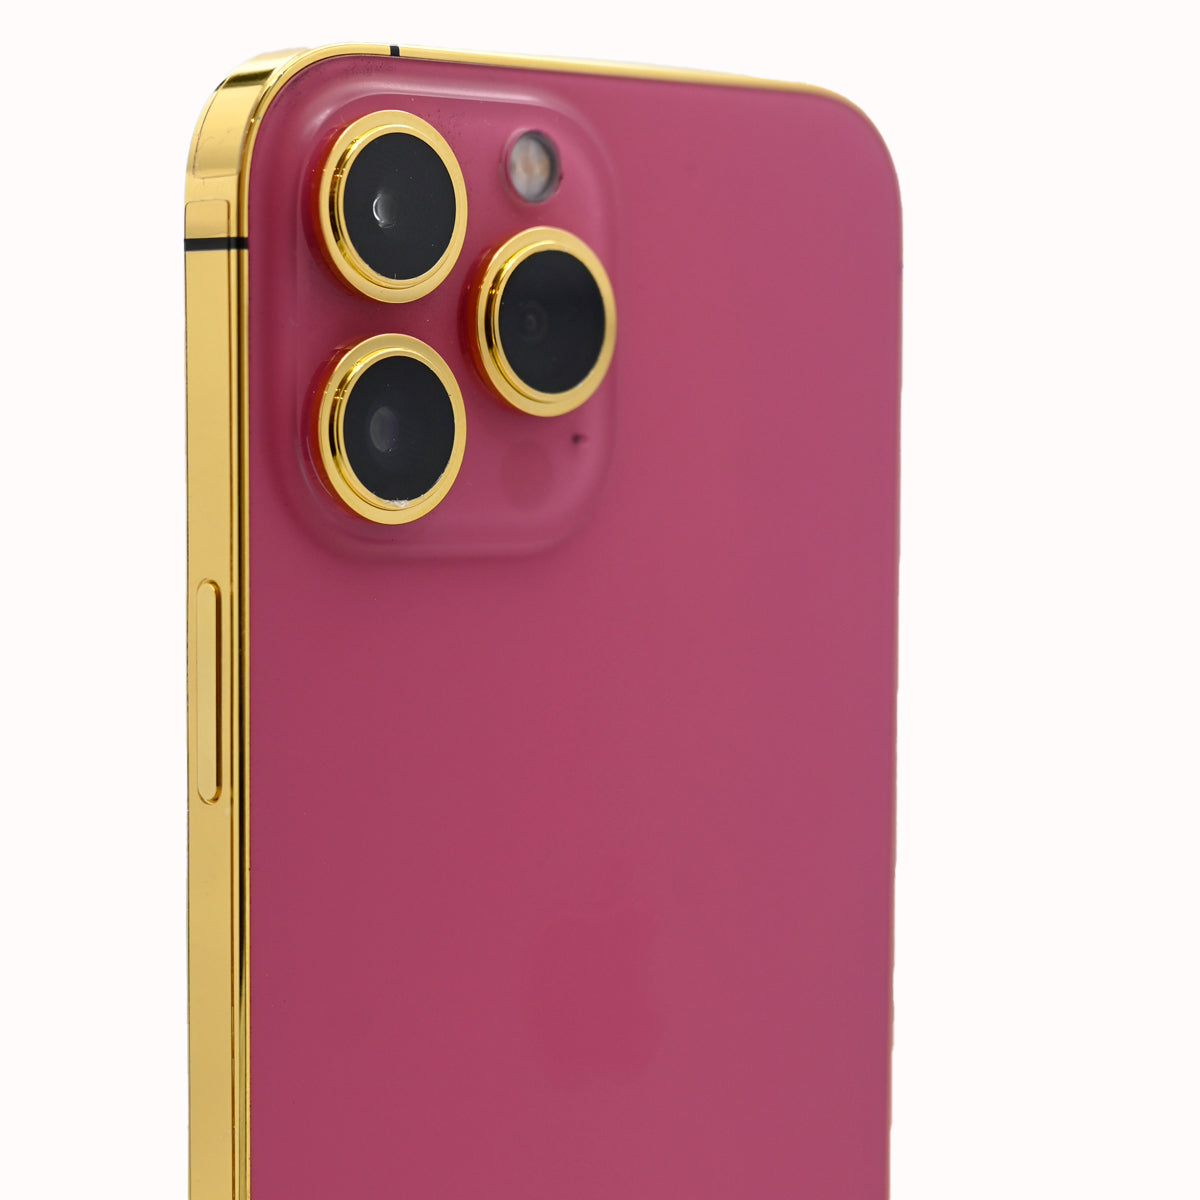 Caviar Luxury 24k Gold Frame Customized iPhone 13 Pro Max 128 GB, Pink